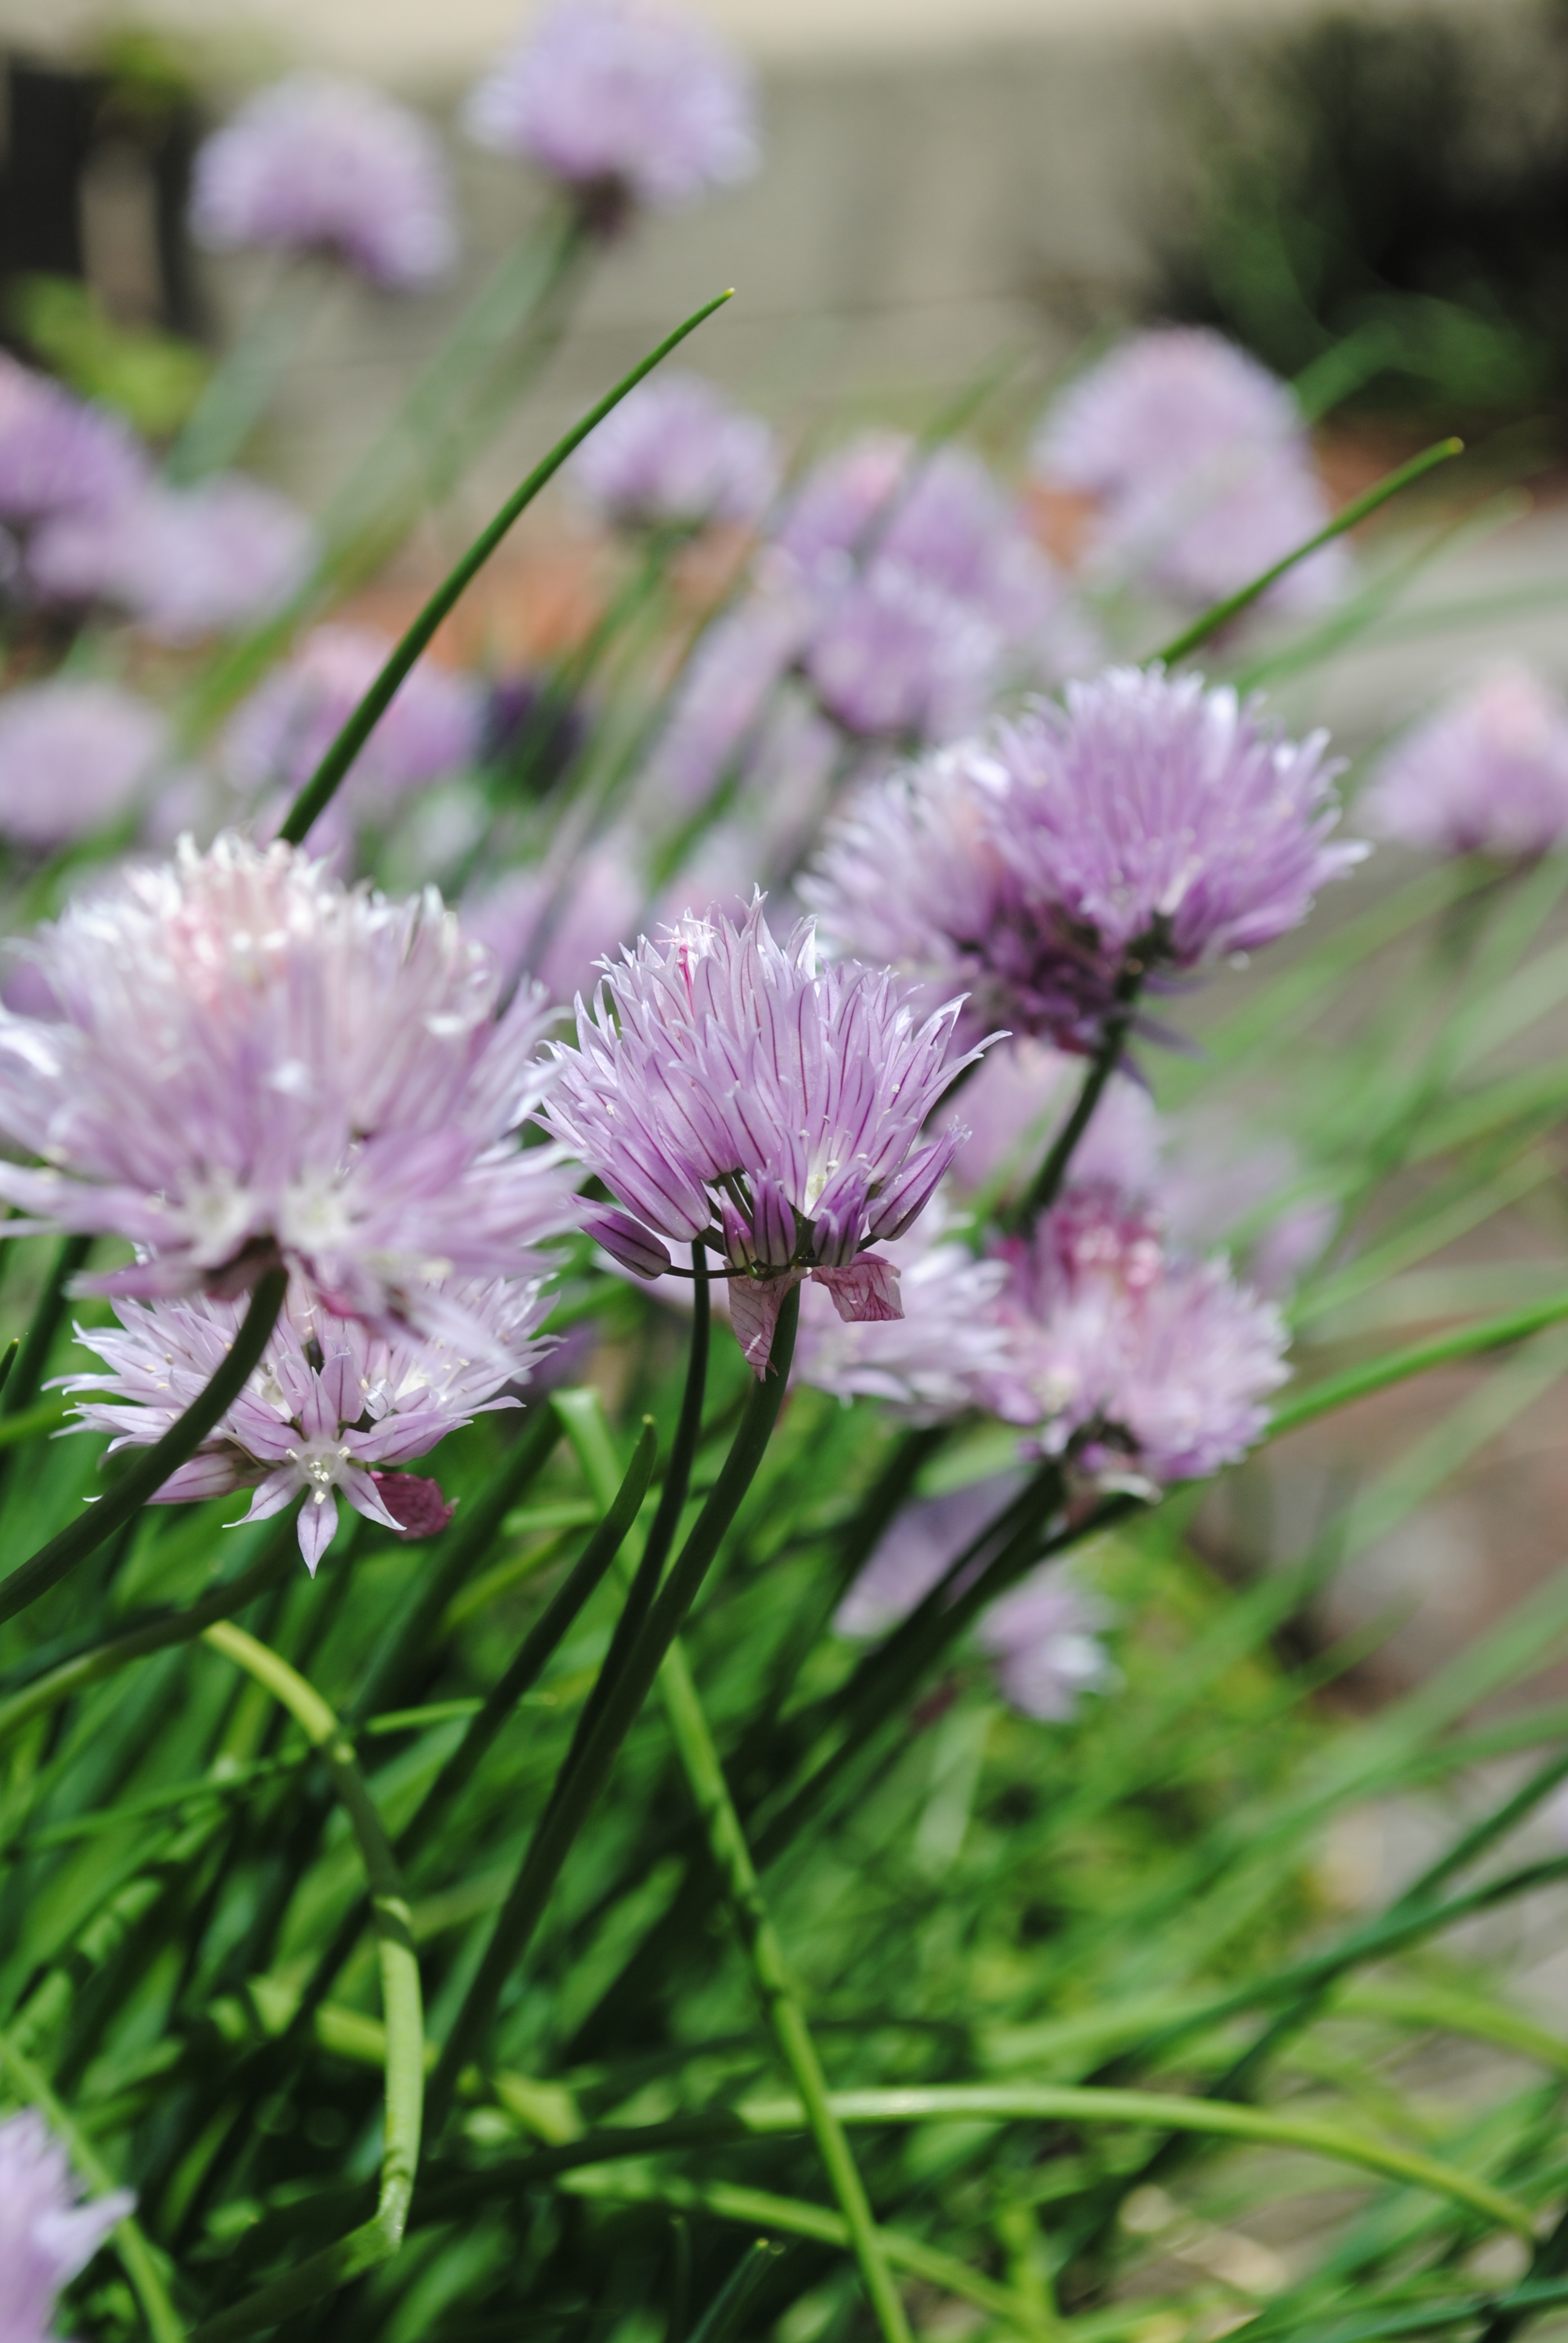 File:Light purple clove flowers 2.jpg - Wikimedia Commons